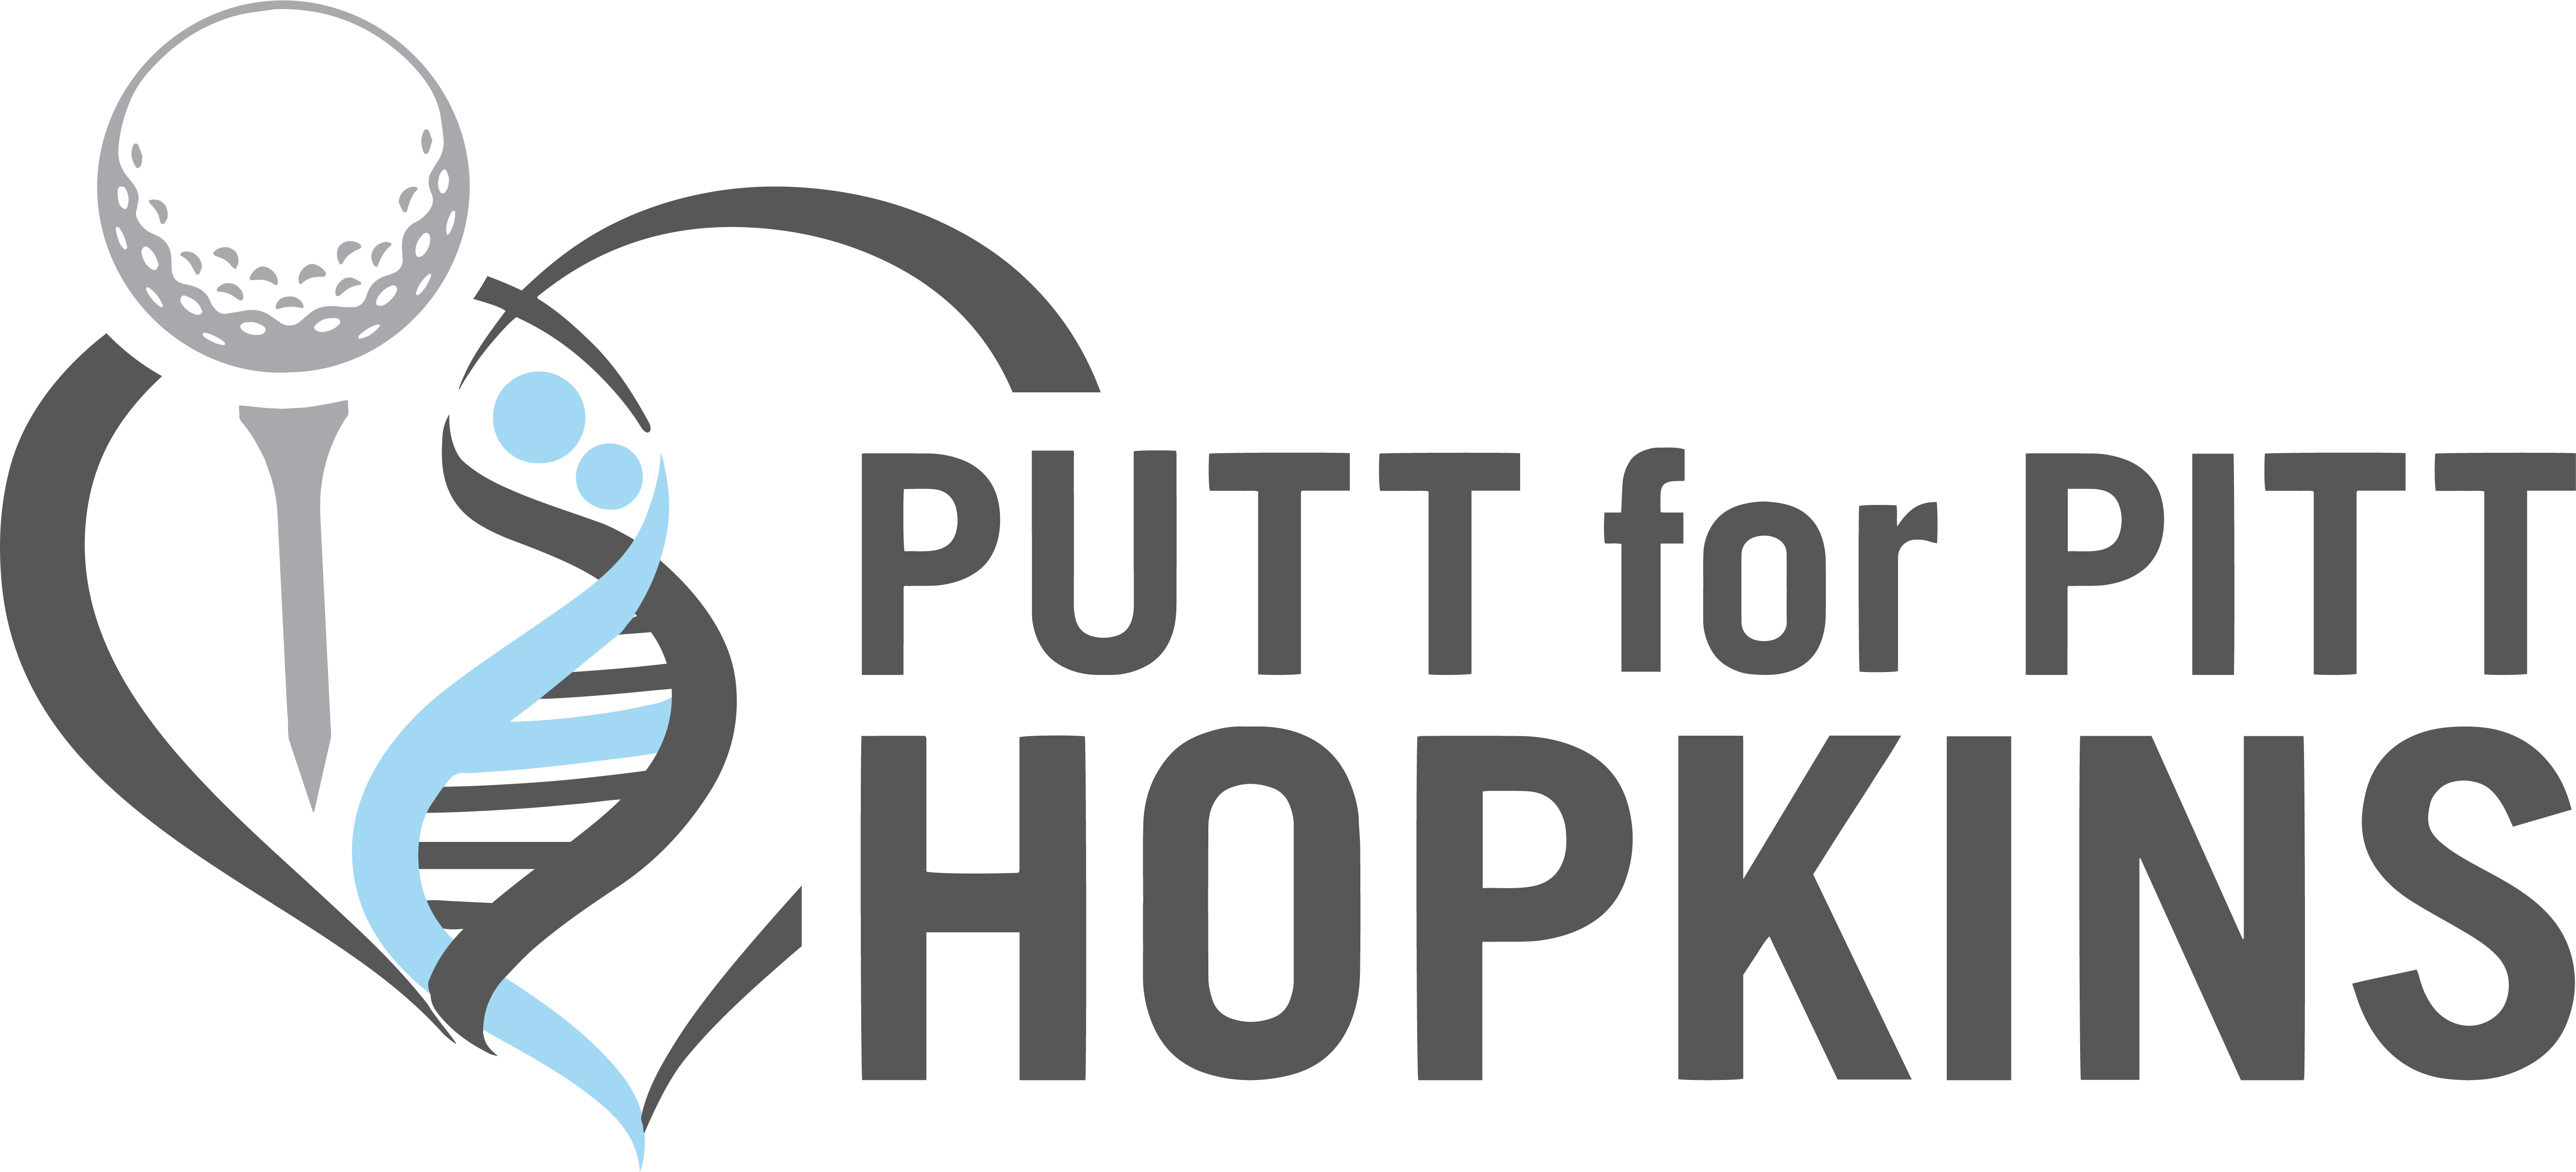 3rd Annual Putt for Pitt Hopkins